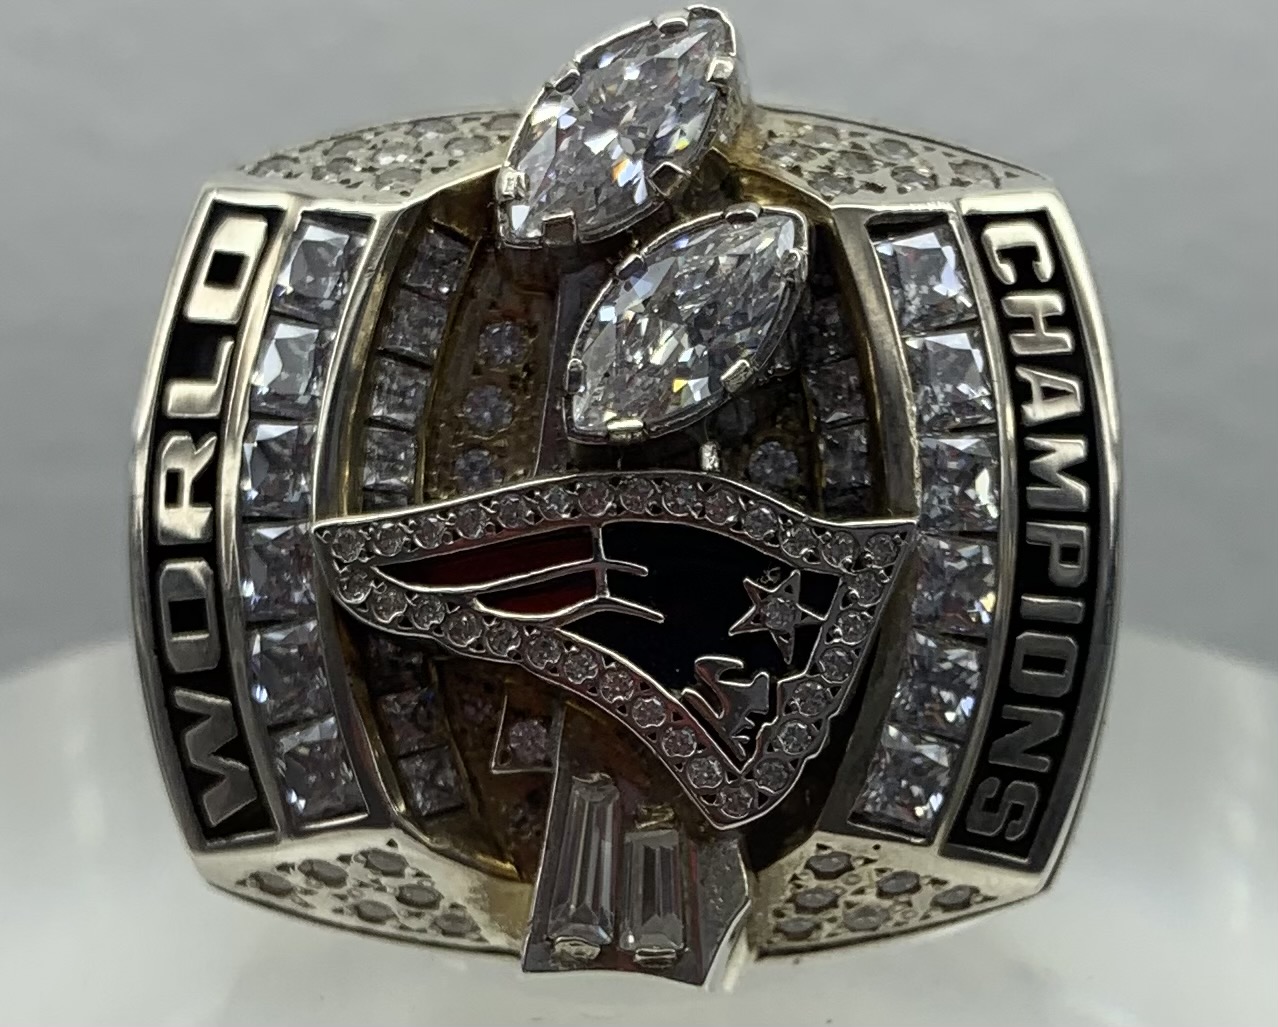 New England Patriots Super Bowl XXXVIII Ring